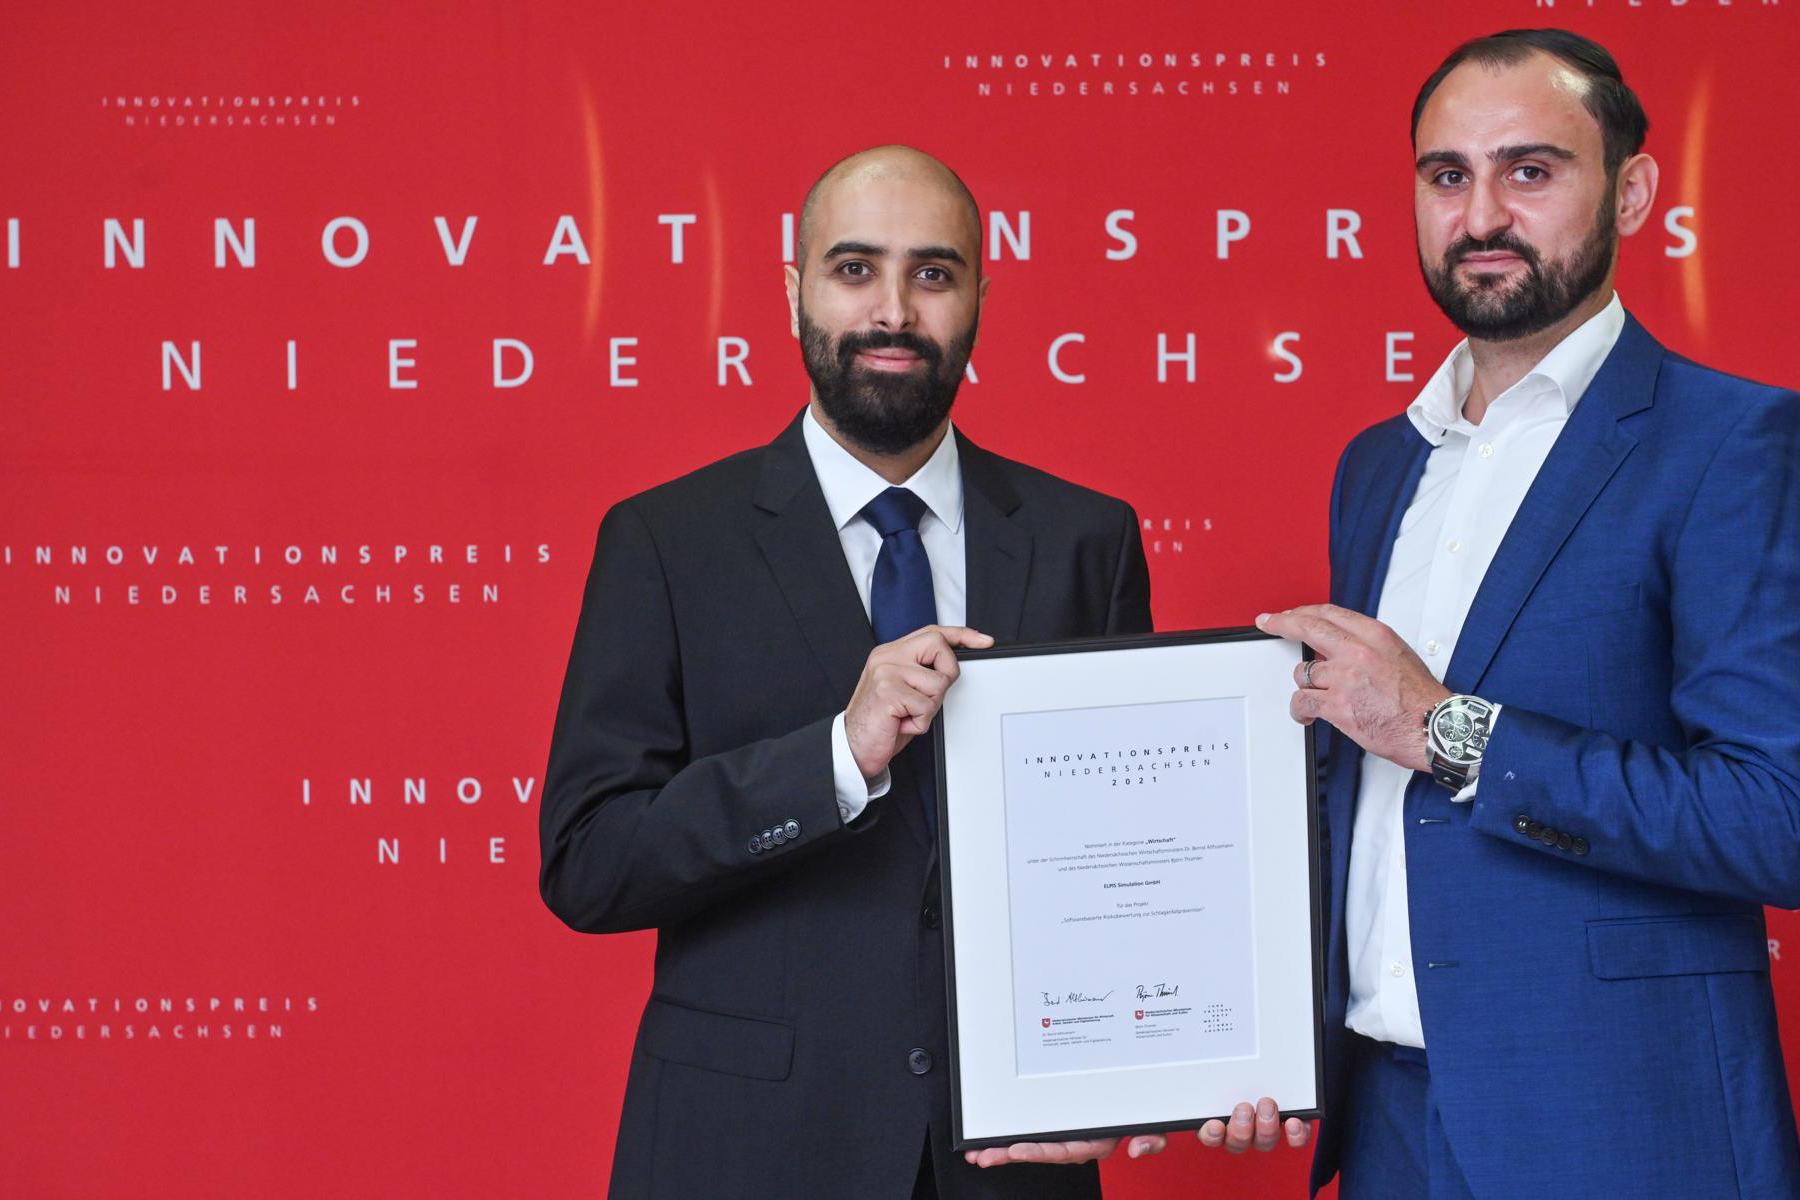 Innovation award Lower Saxony 2021